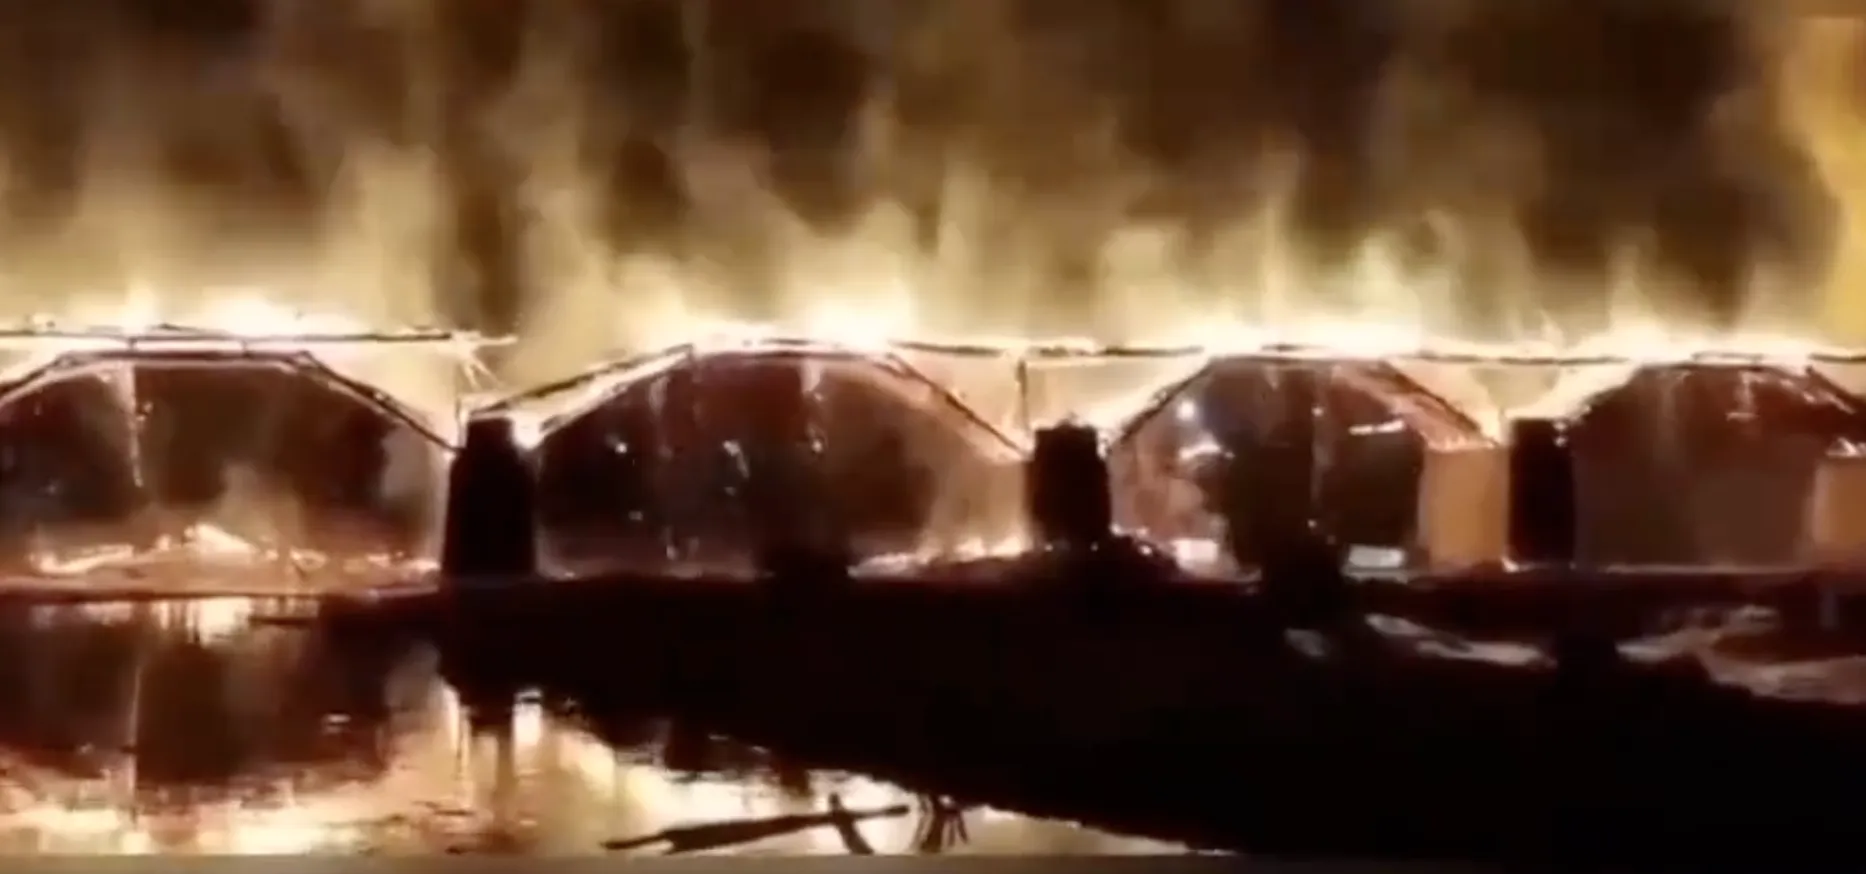 Burned down bridge in Fujian